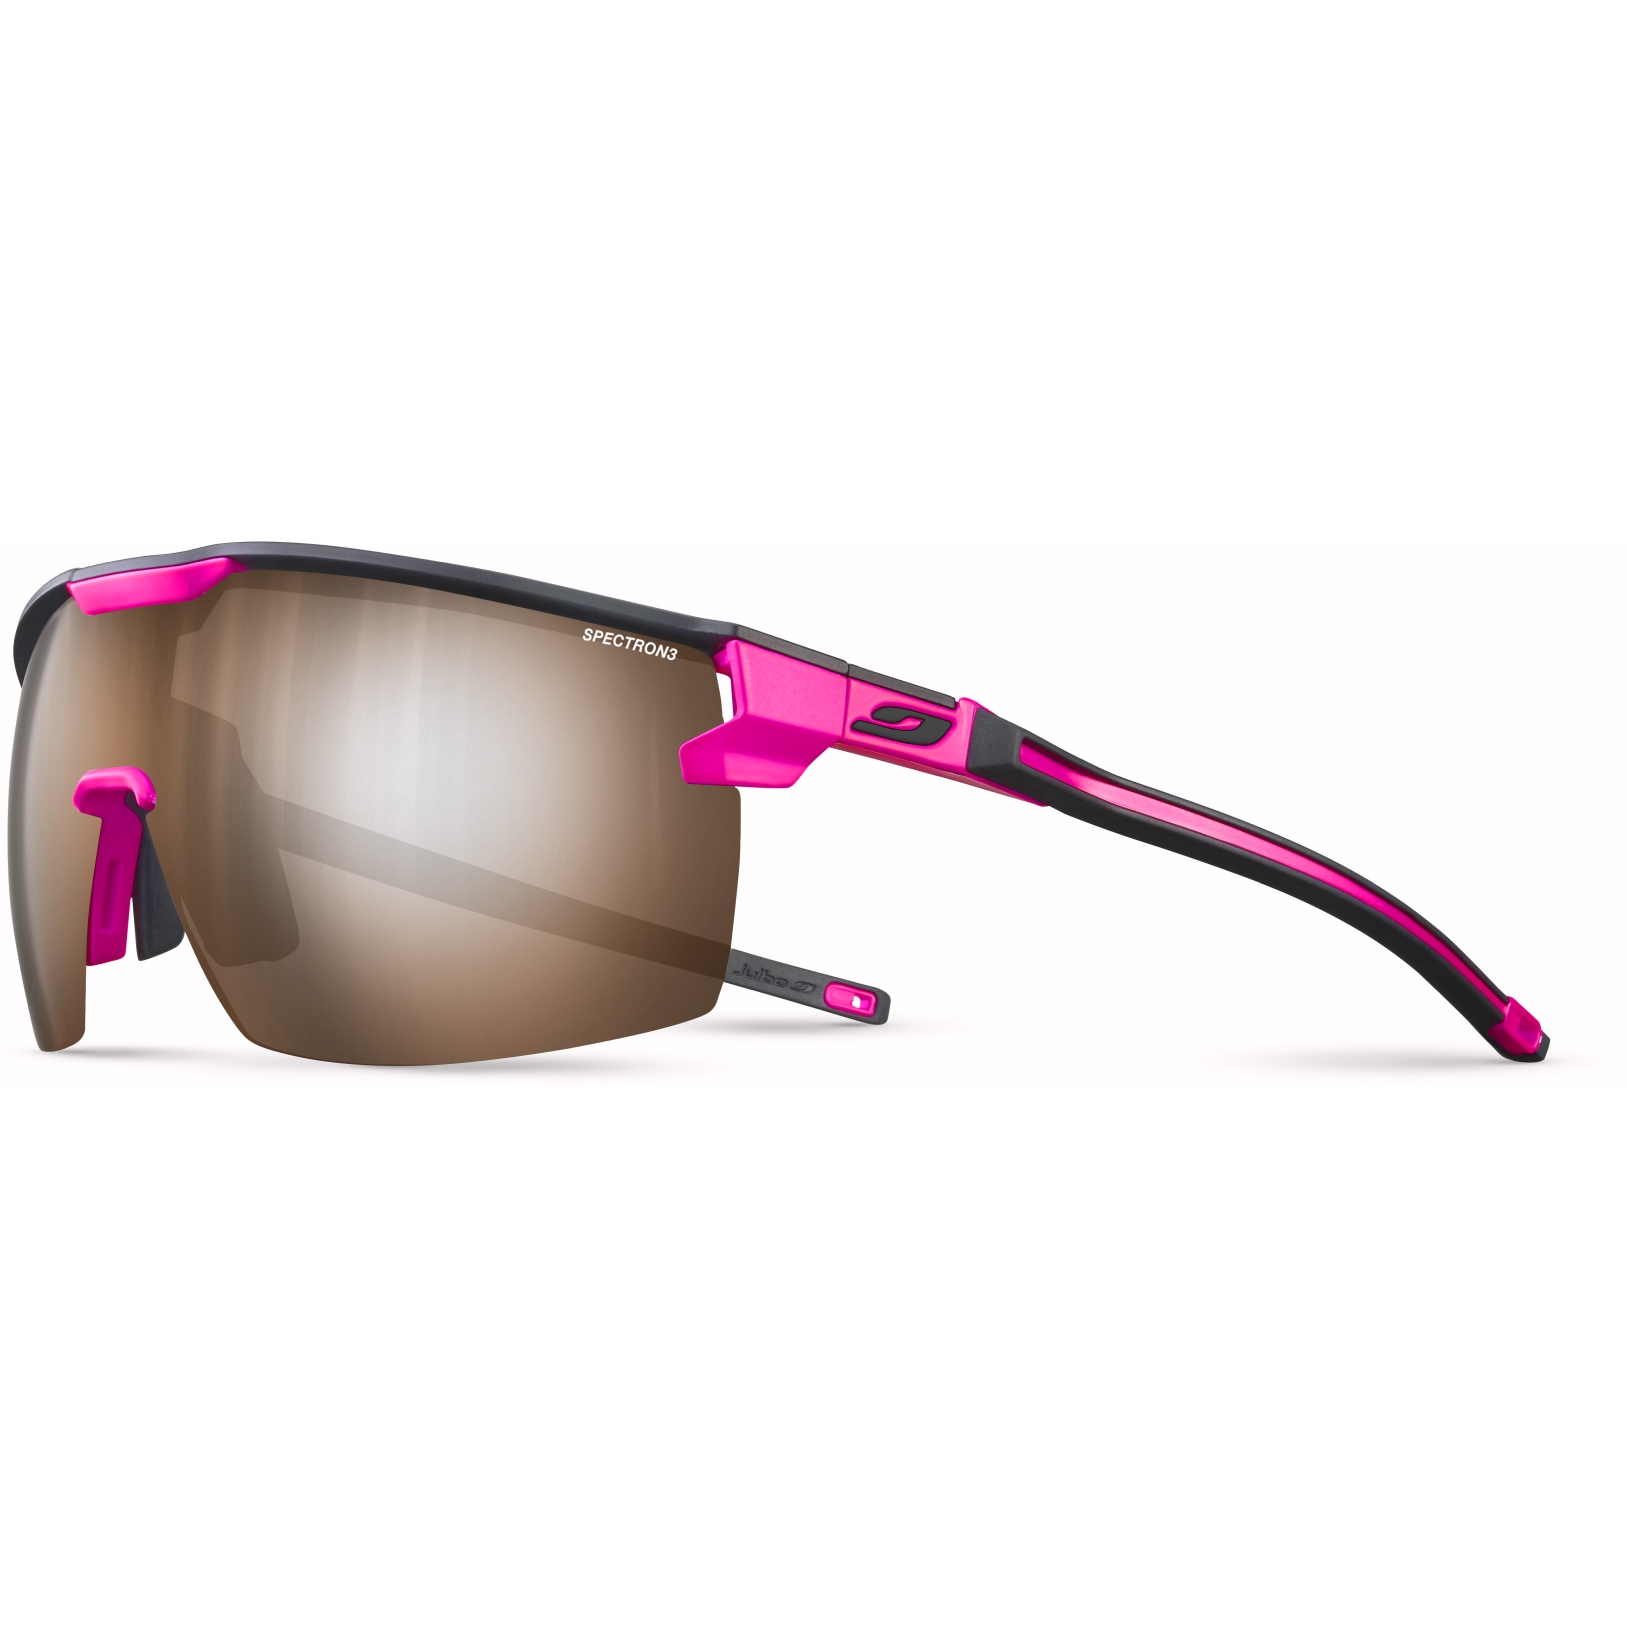 Productfoto van Julbo Ultimate Spectron 3+ Sunglasses - Black / Pink Fluo